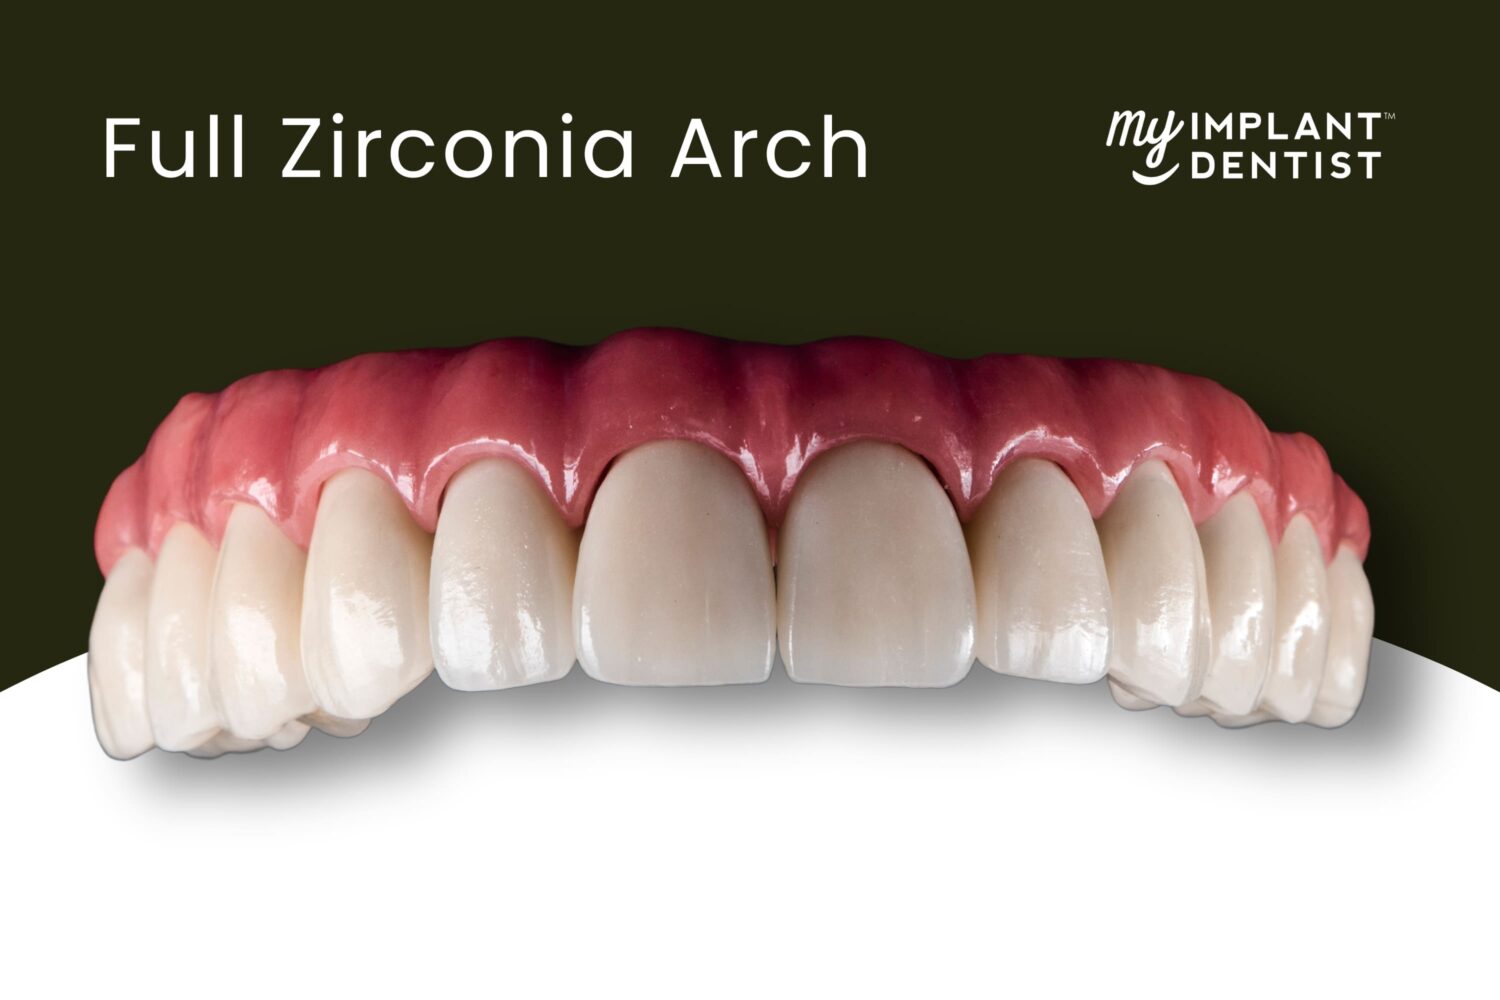 Full Zirconia Arch Dental Implant